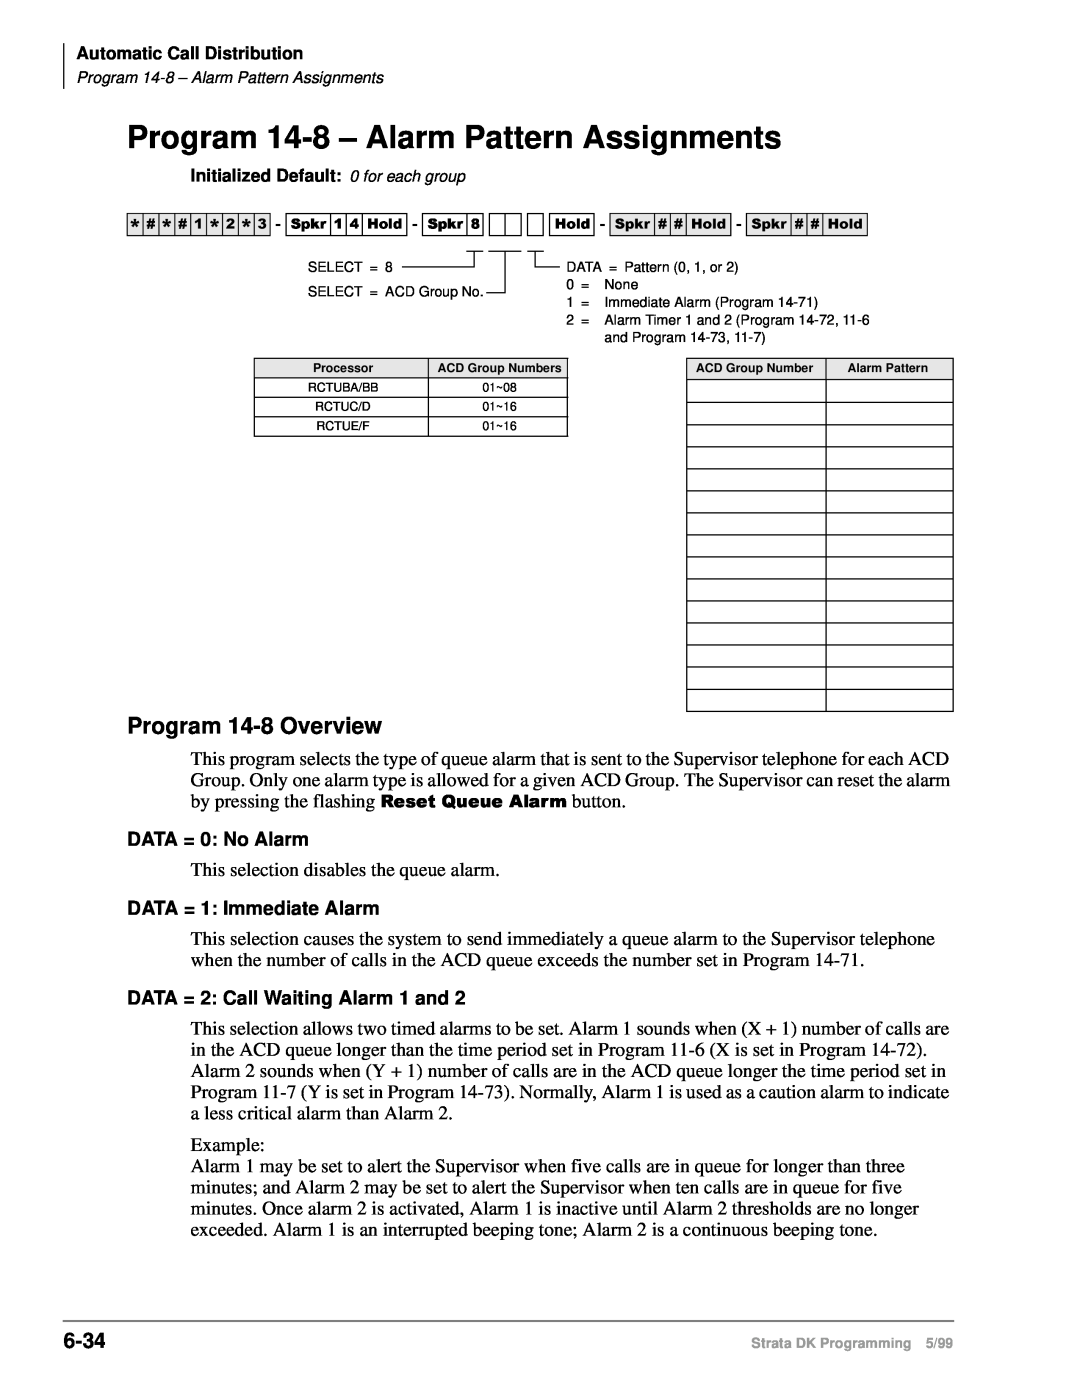 Toshiba dk14 manual Program 14-8– Alarm Pattern Assignments, Program 14-8Overview, 6-34, DATA = 0: No Alarm 